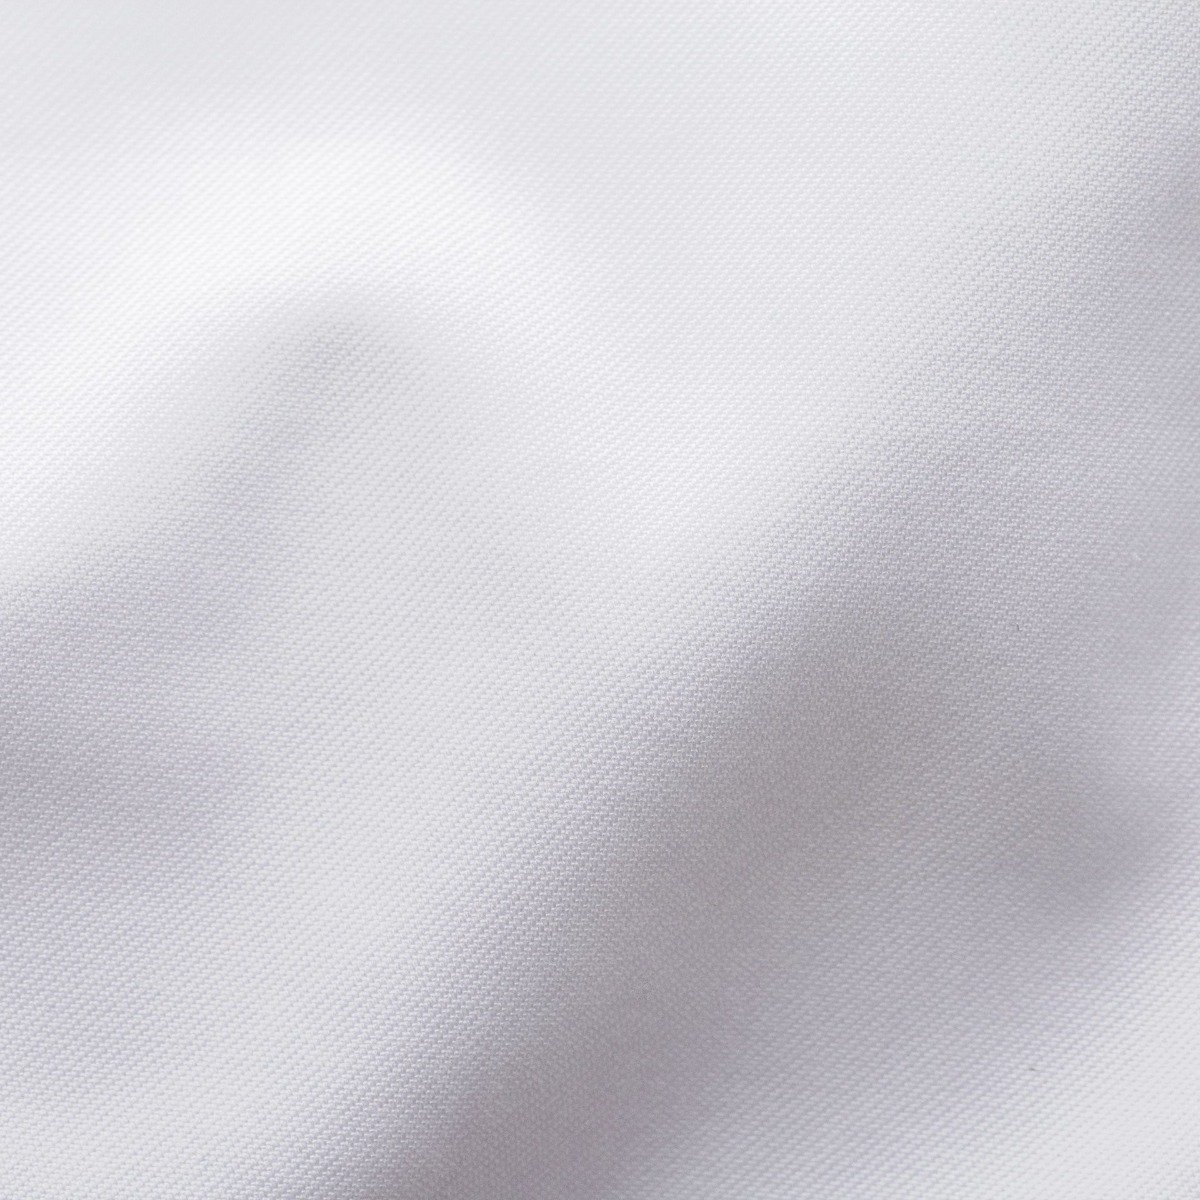 Eton white slim fit signature twill men's dress shirt